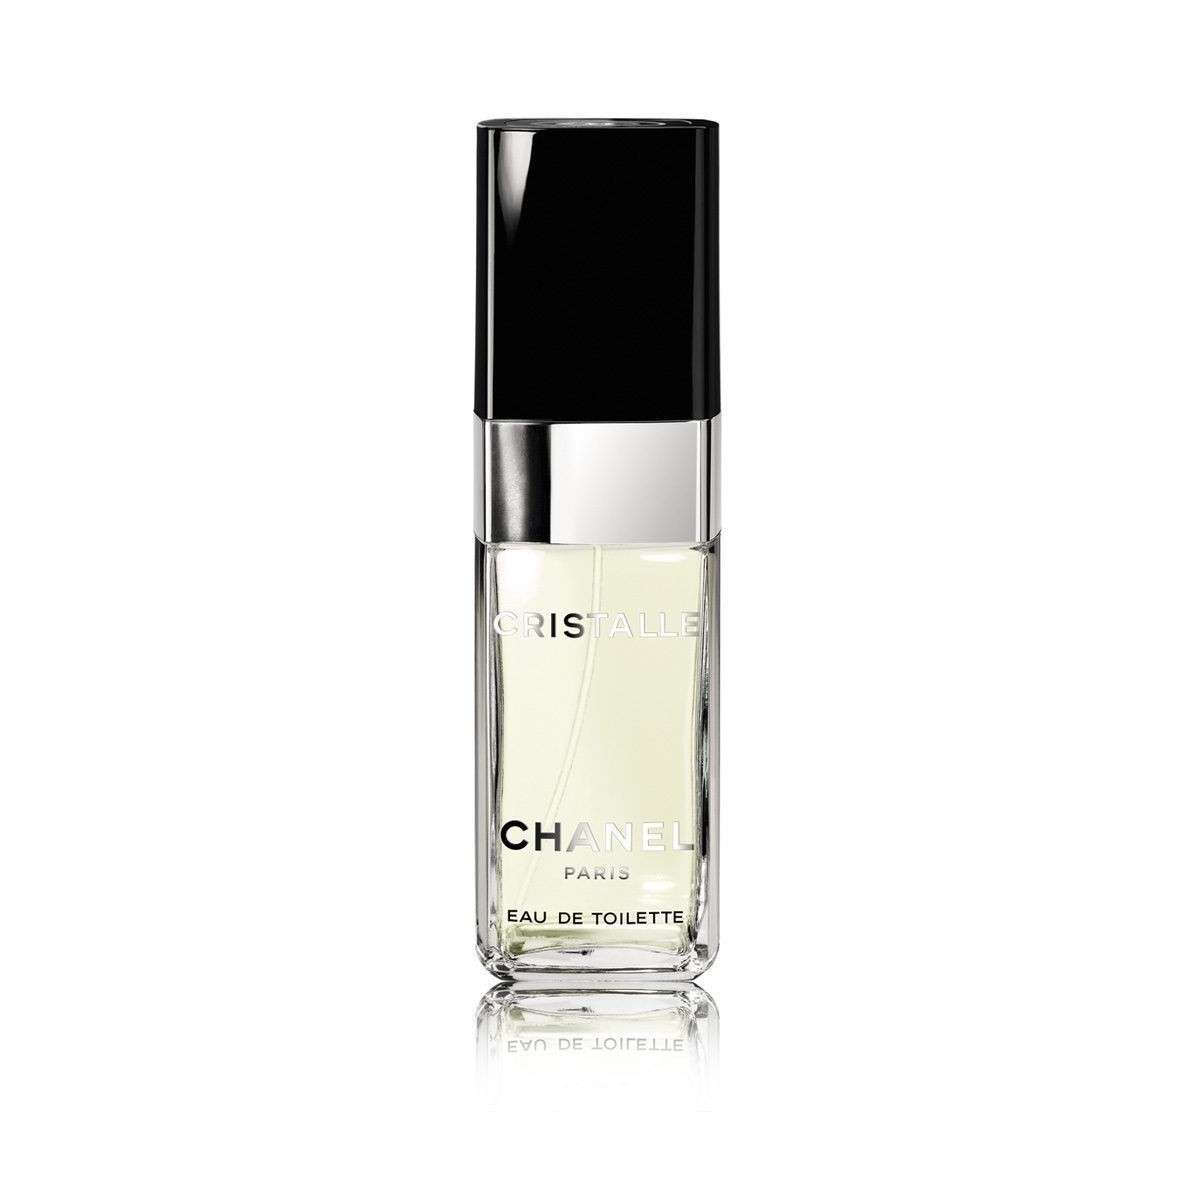 Chanel Cristalle EDT 100 ml - Long-lasting fragrance for all!